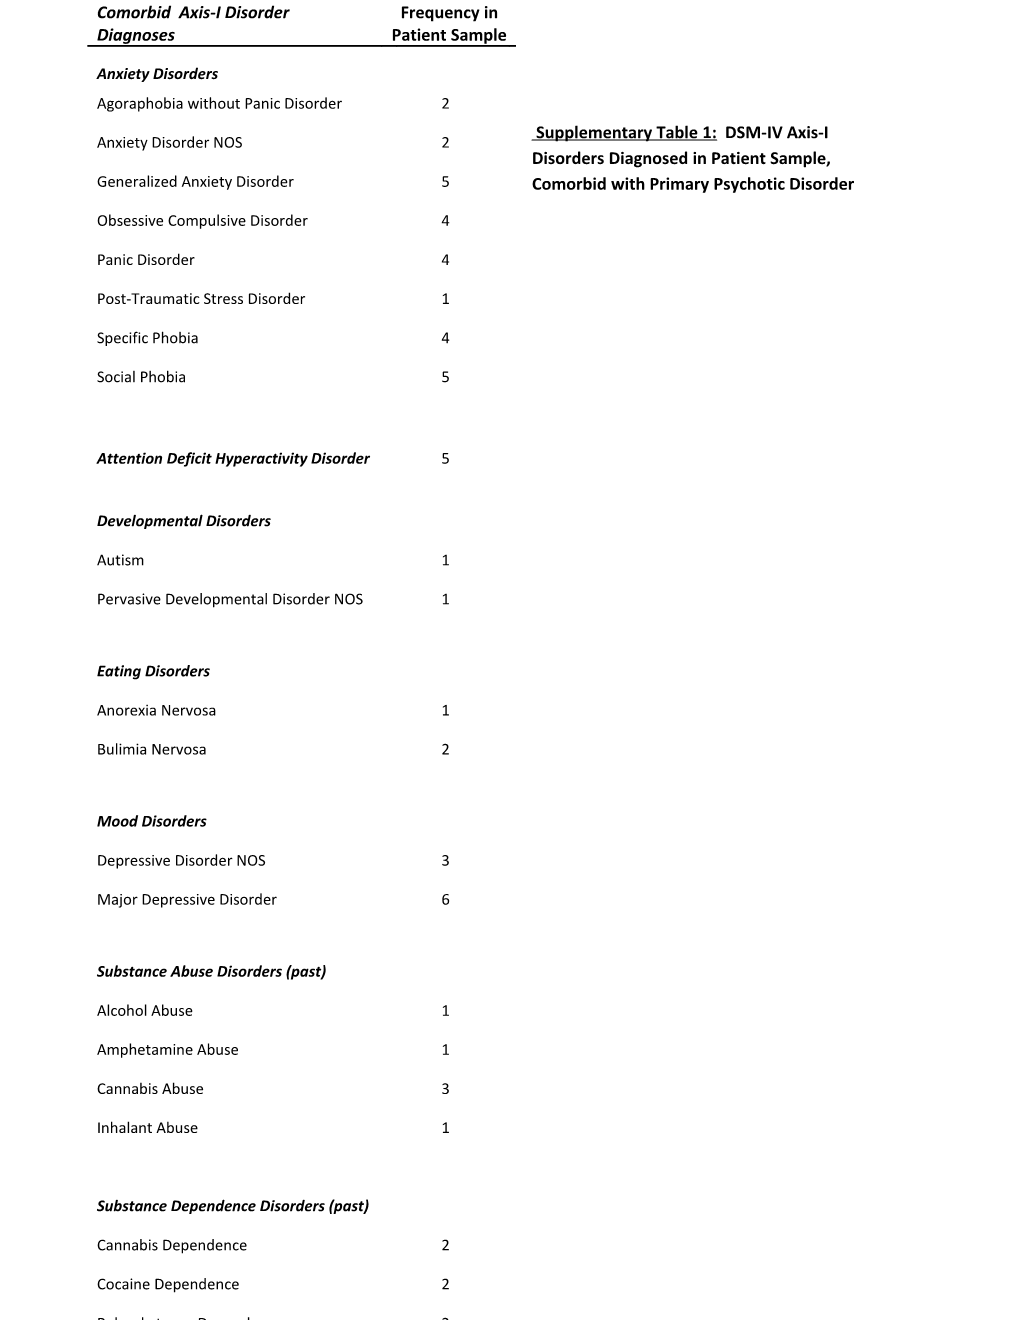 Supplementary Table 2: Neuropsychological Summary Scores, Descriptive Statistics